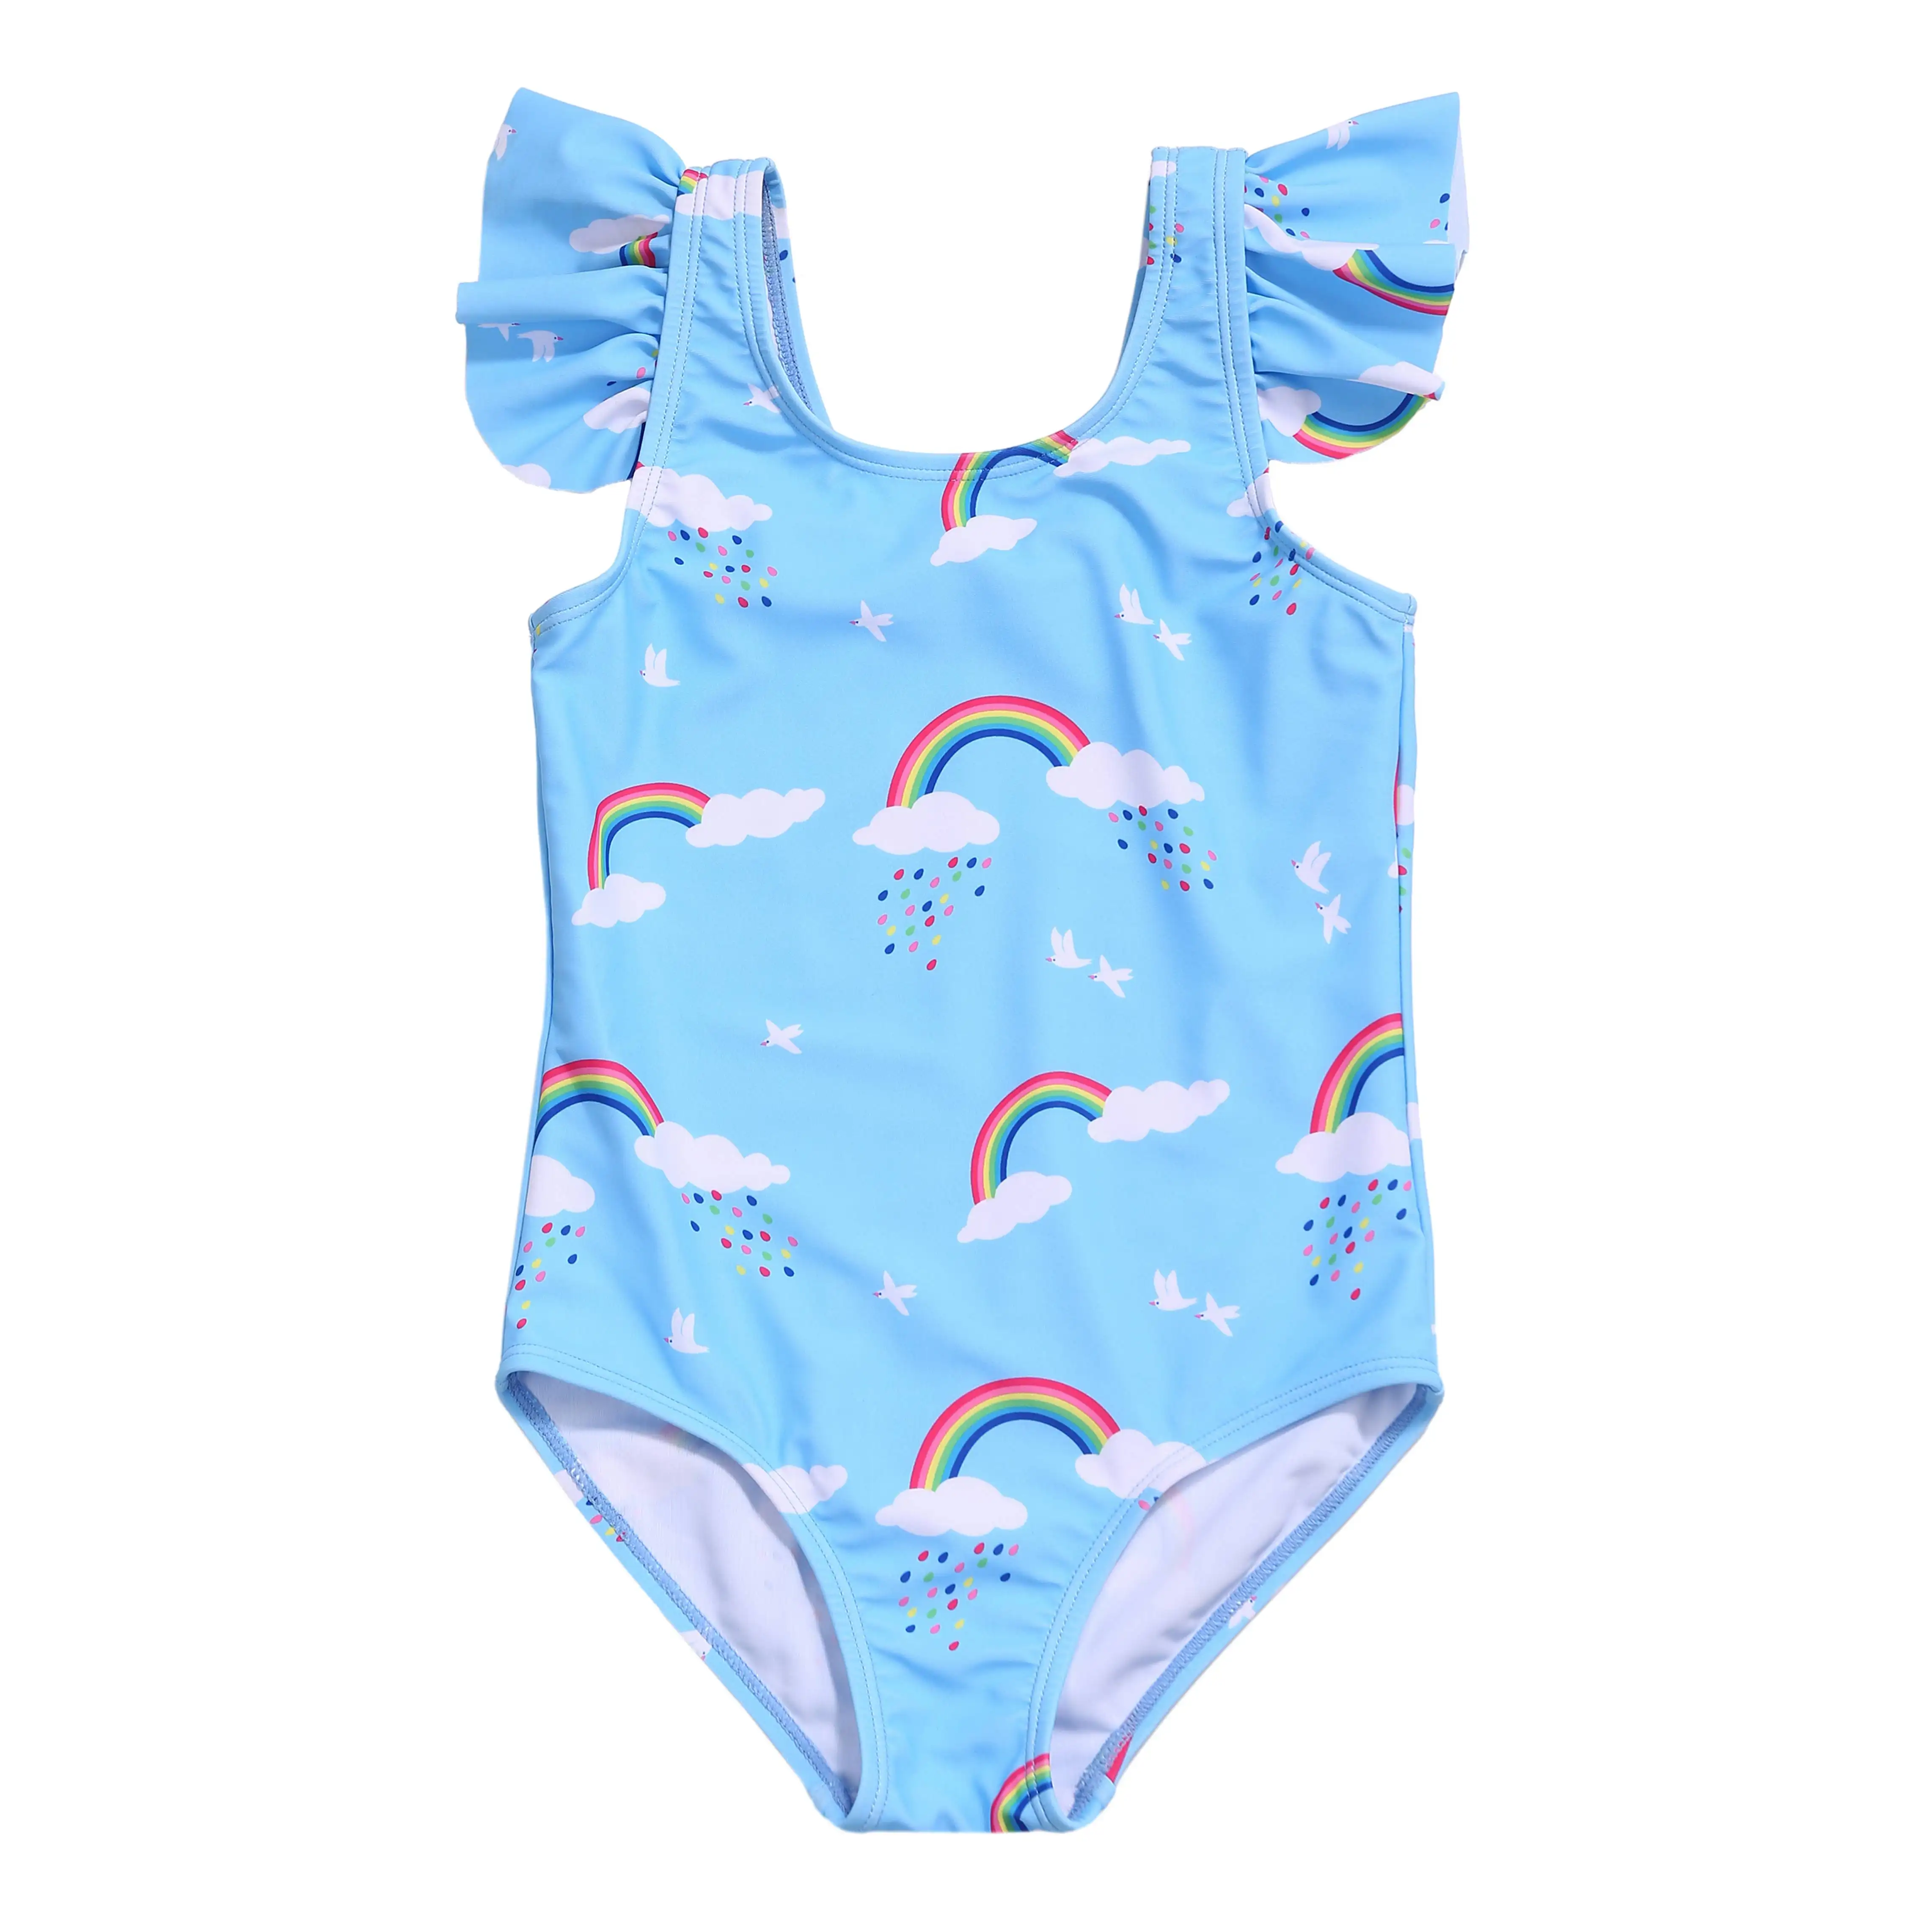 उच्च गुणवत्ता बच्चों को एक टुकड़ा swimwear के शिशु बिना आस्तीन बिकनी बच्चे लड़कियों पहनने तैरने समुद्र तट स्नान सूट